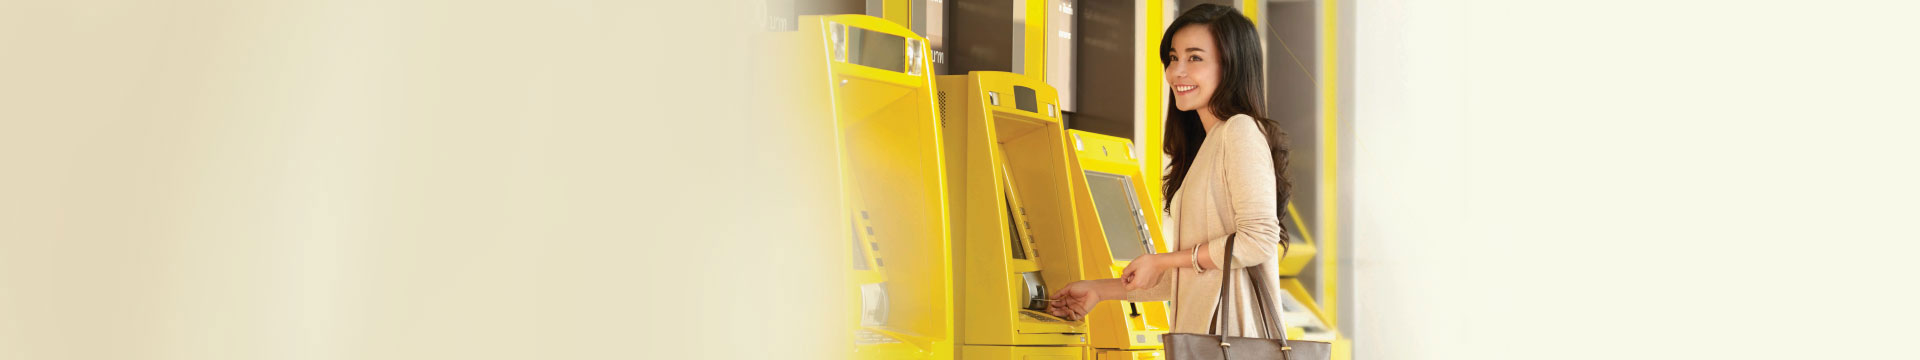 Krungsri Western Union via ATM